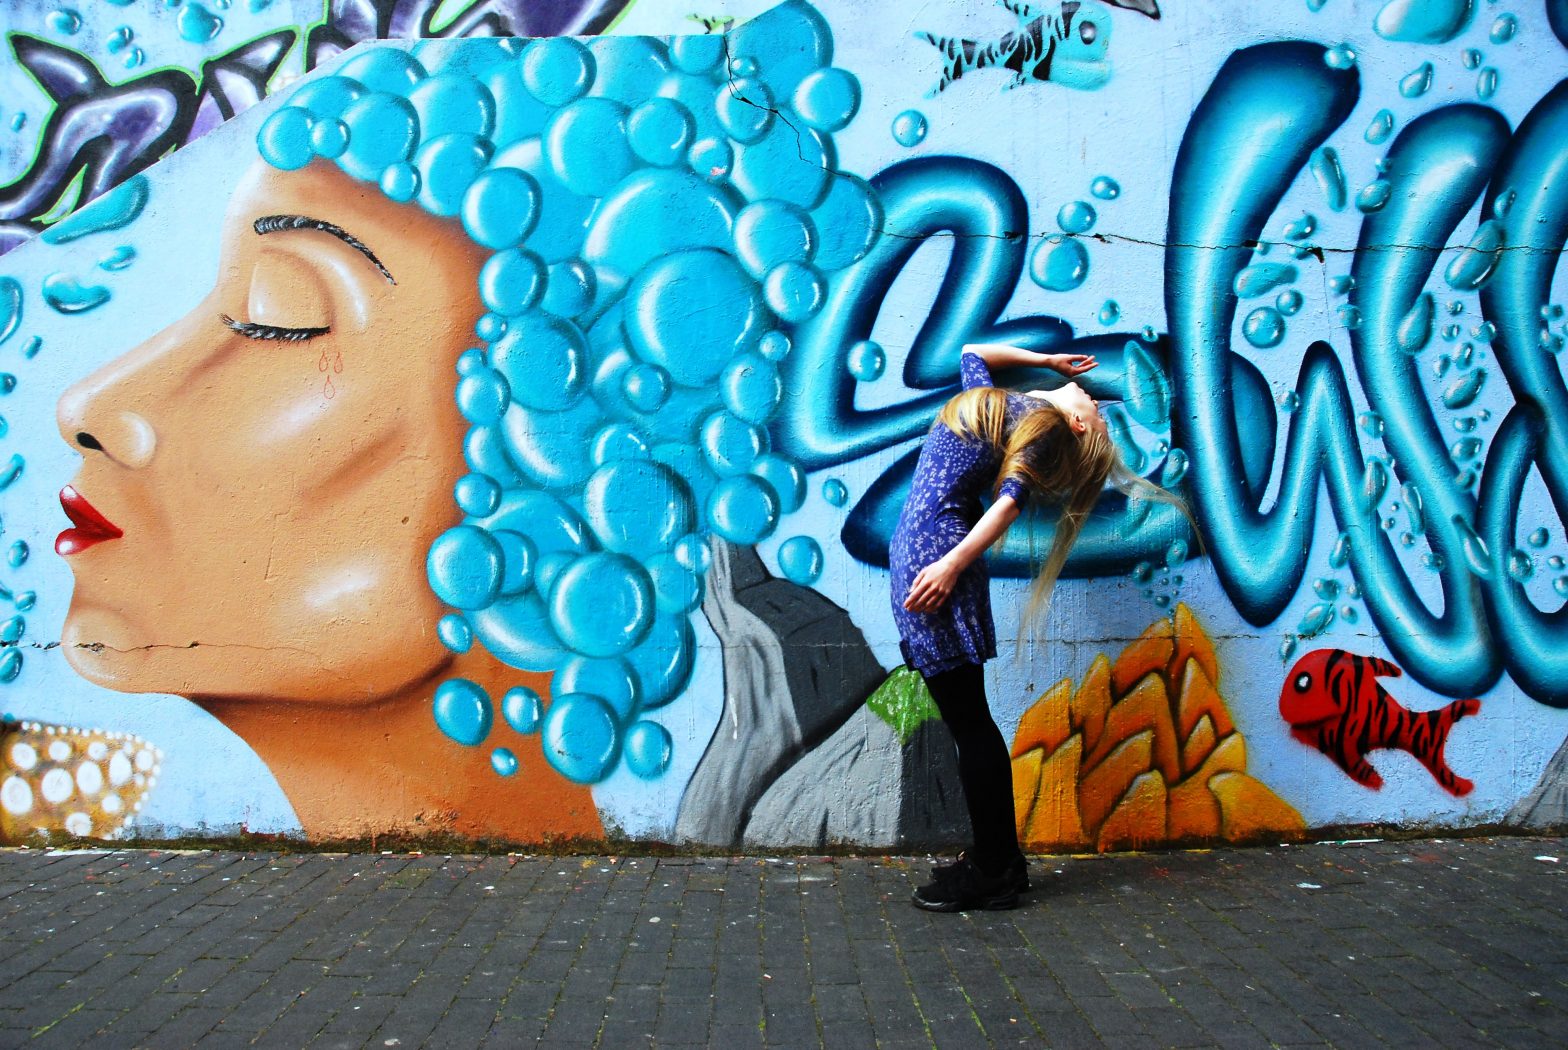 A woman leans back against a backdrop of a blue graffiti